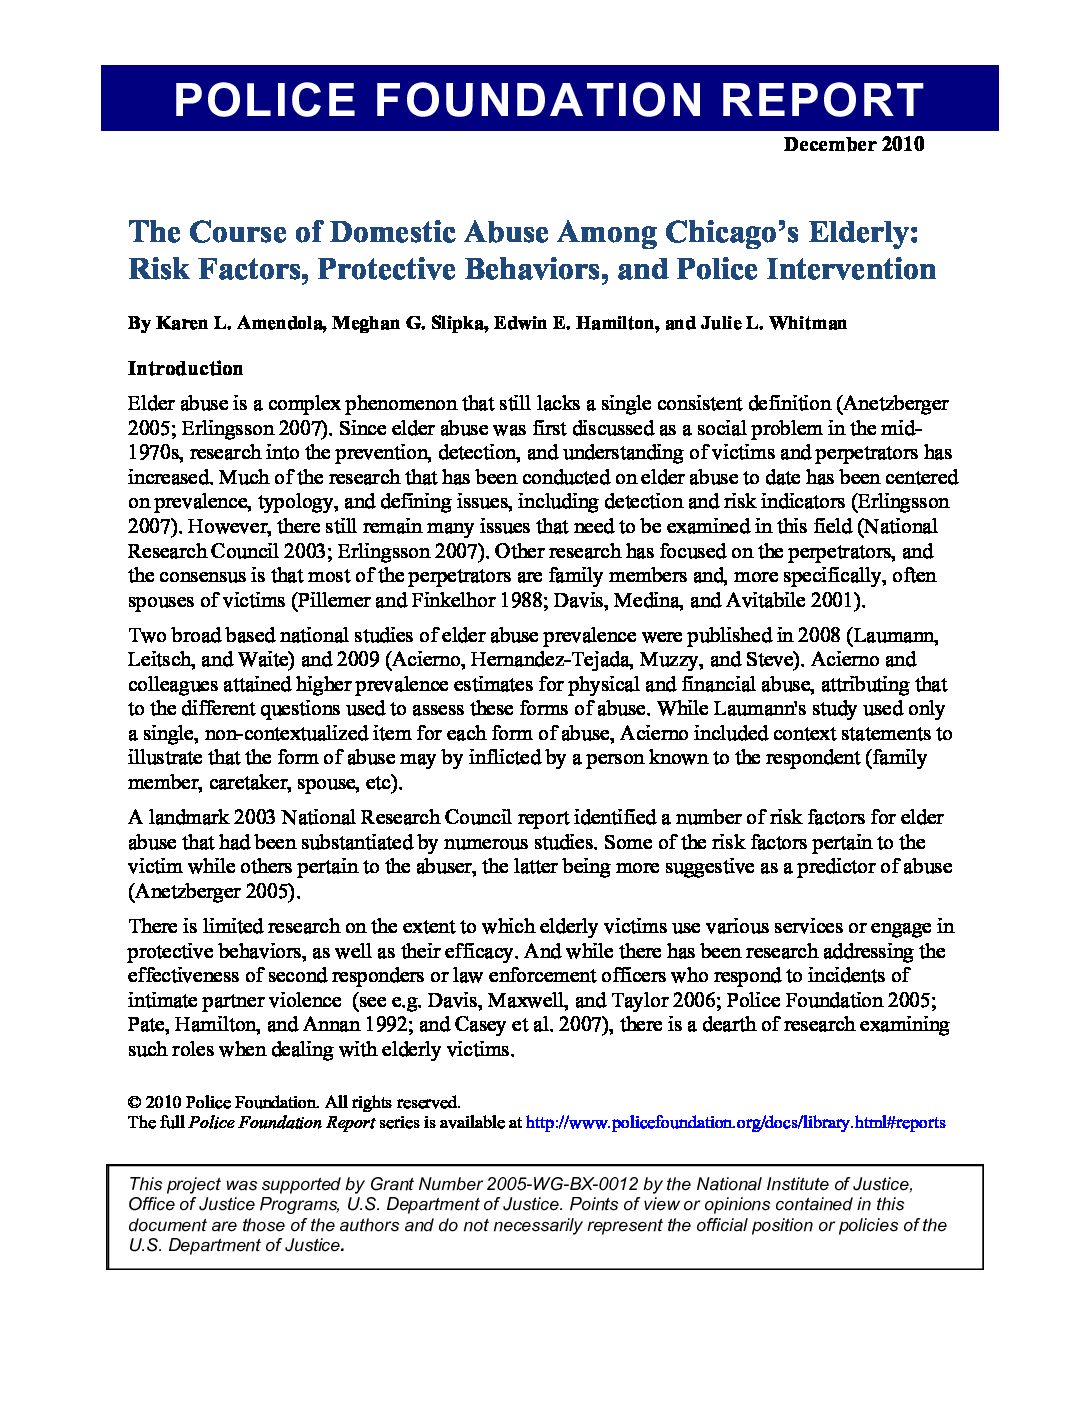 Amendola-et-al.-2010-Course-of-Domestic-Abuse-Among-Chicago’s-Elderly-pdf